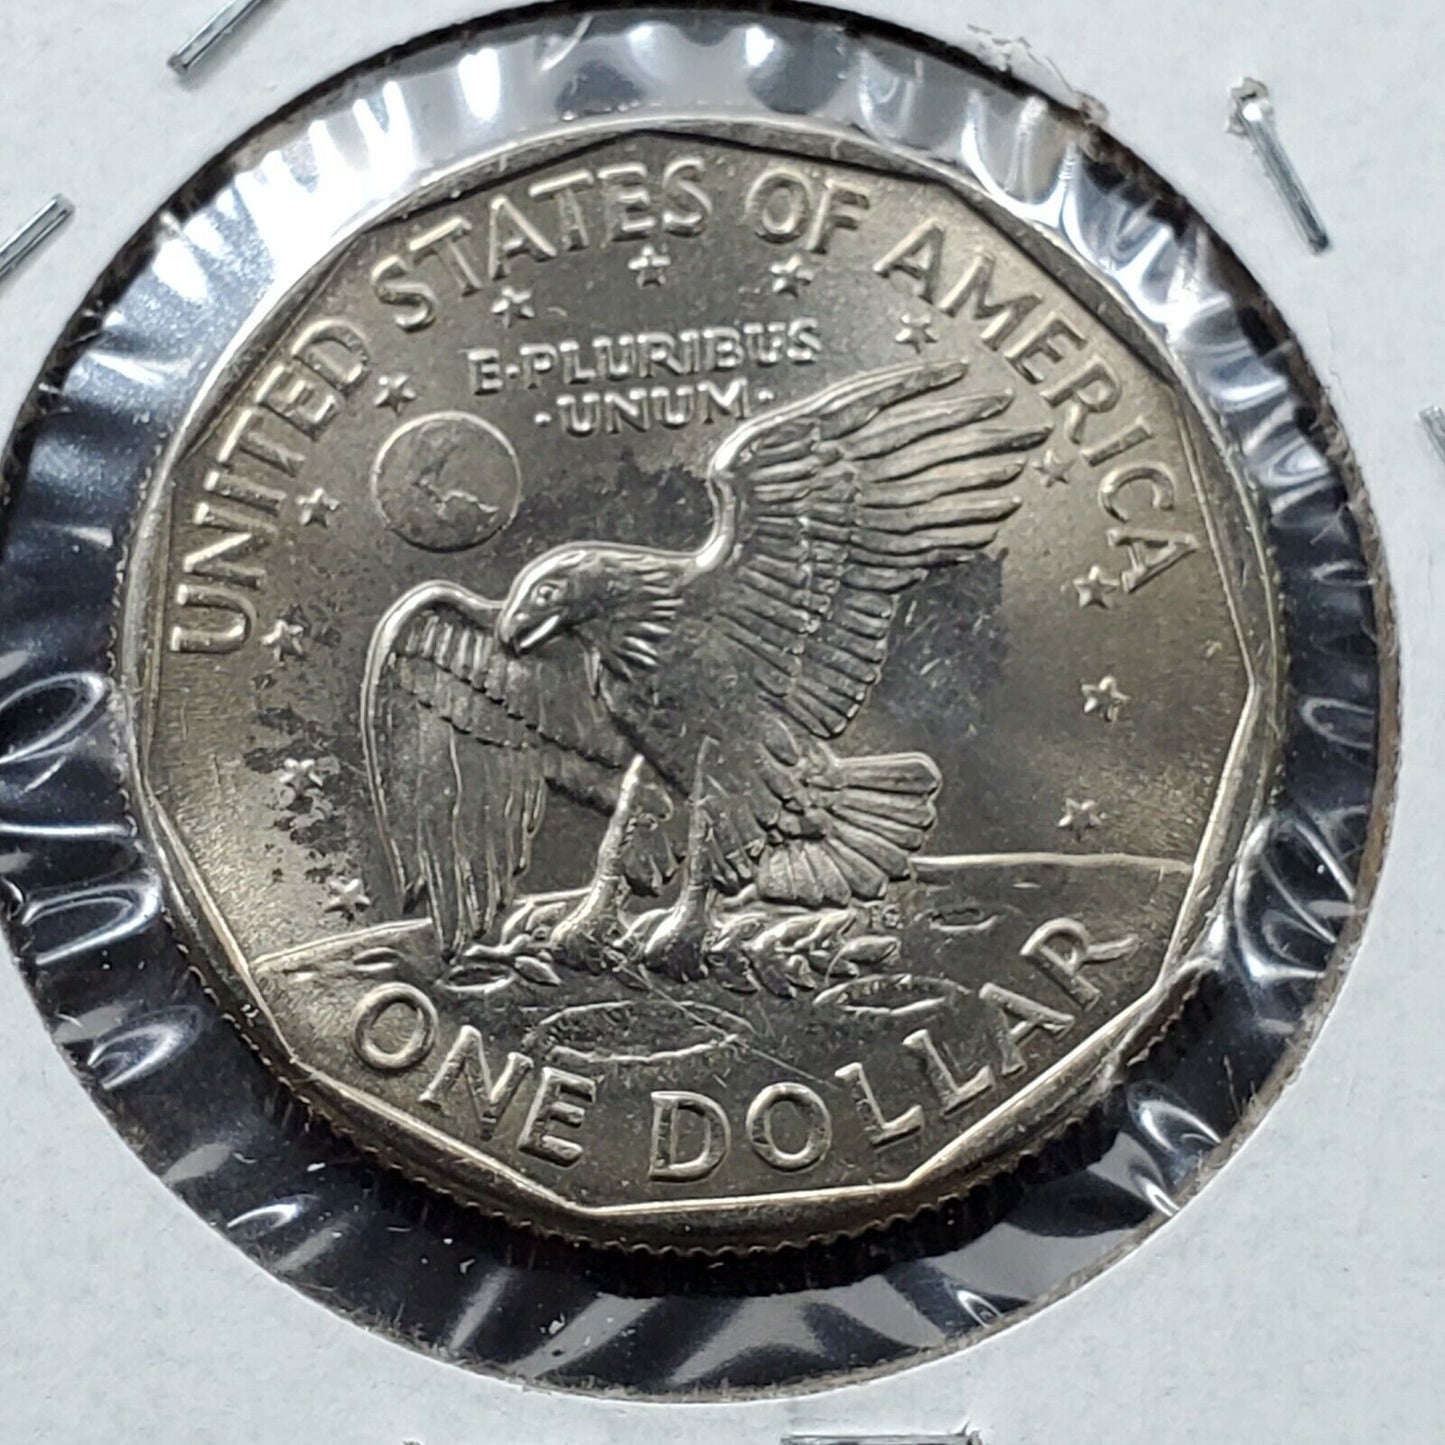 1999 P SBA $1 Susan B Anthony Small Size Dollar Coin Gem BU Uncirculated